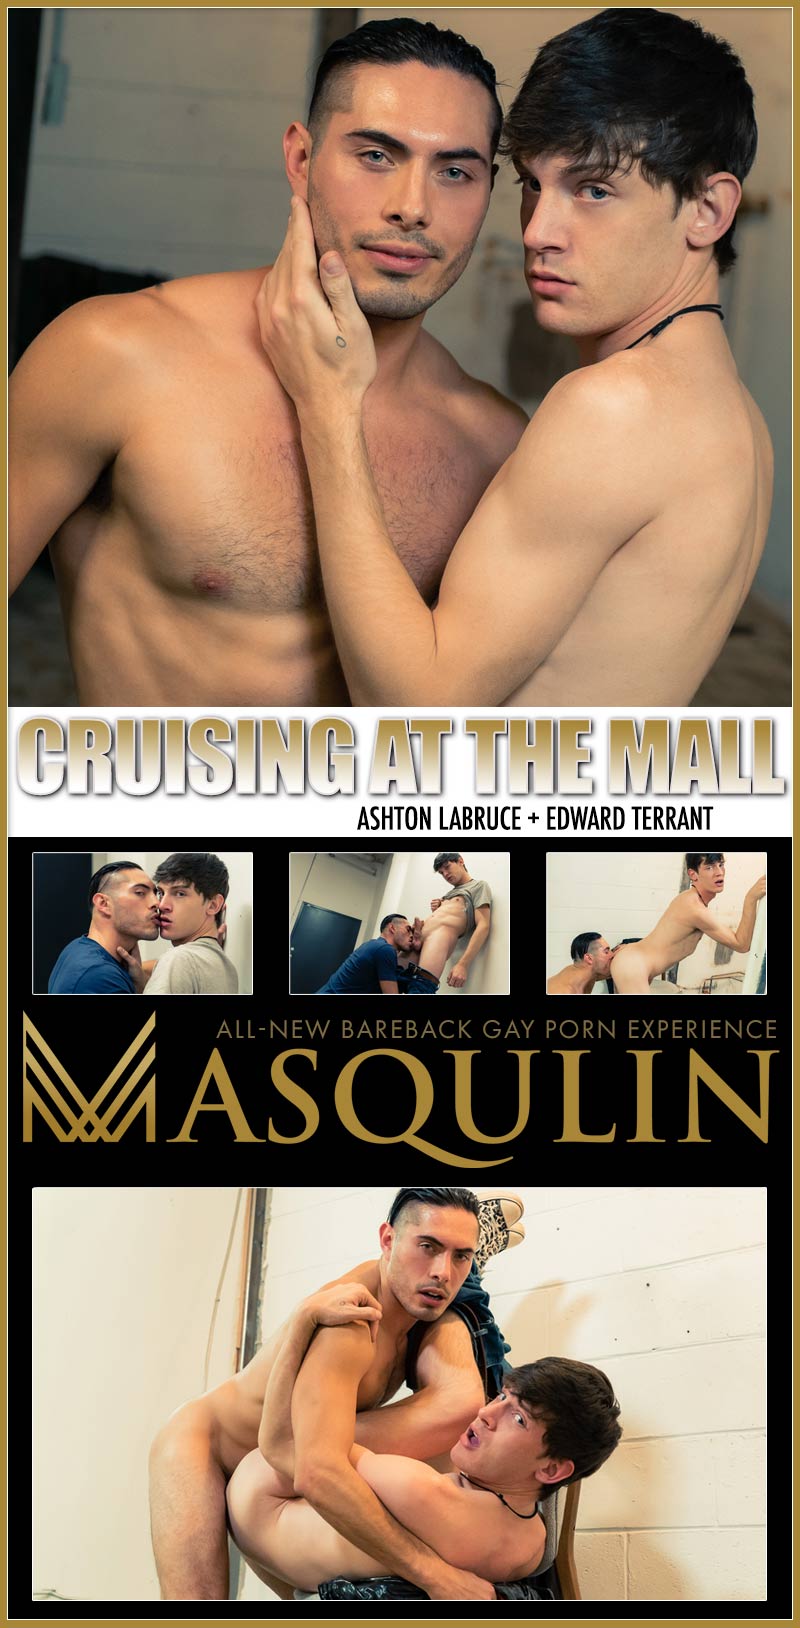 Cruising At The Mall (Ashton Labruce Fucks Edward Terrant) on MASQULIN